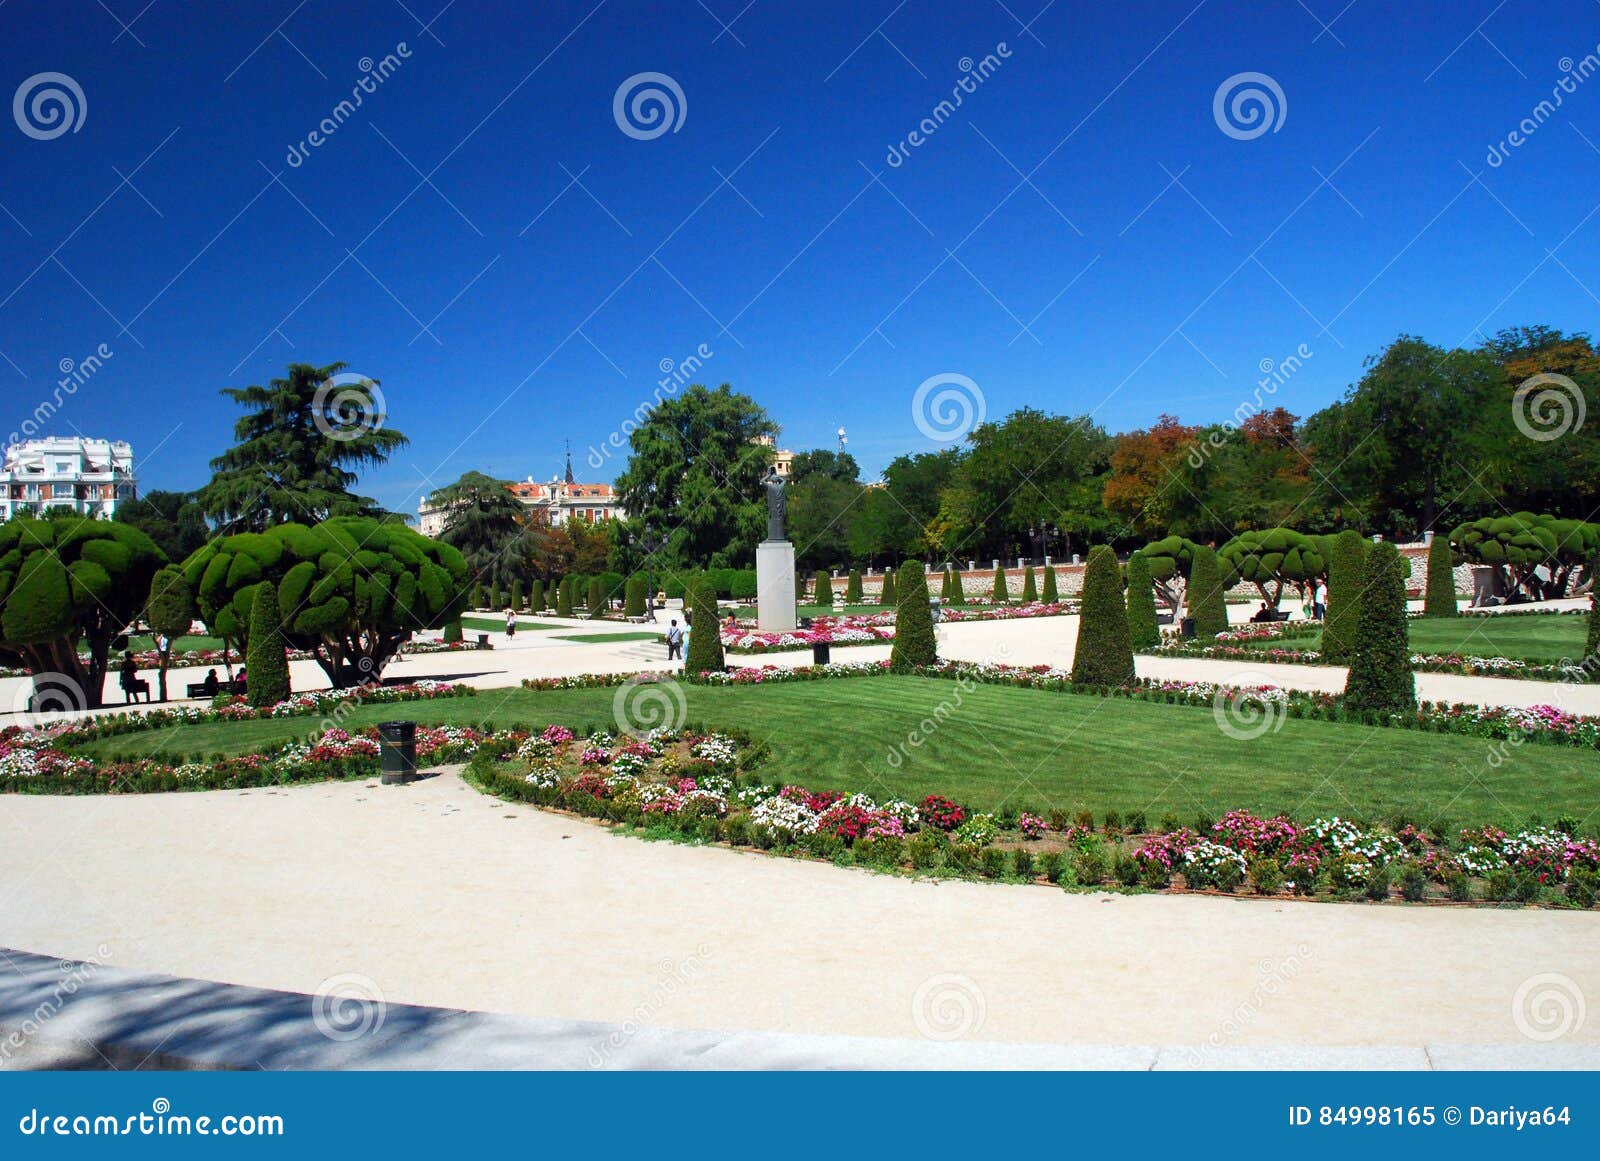 royal botanical garden of madrid, spain